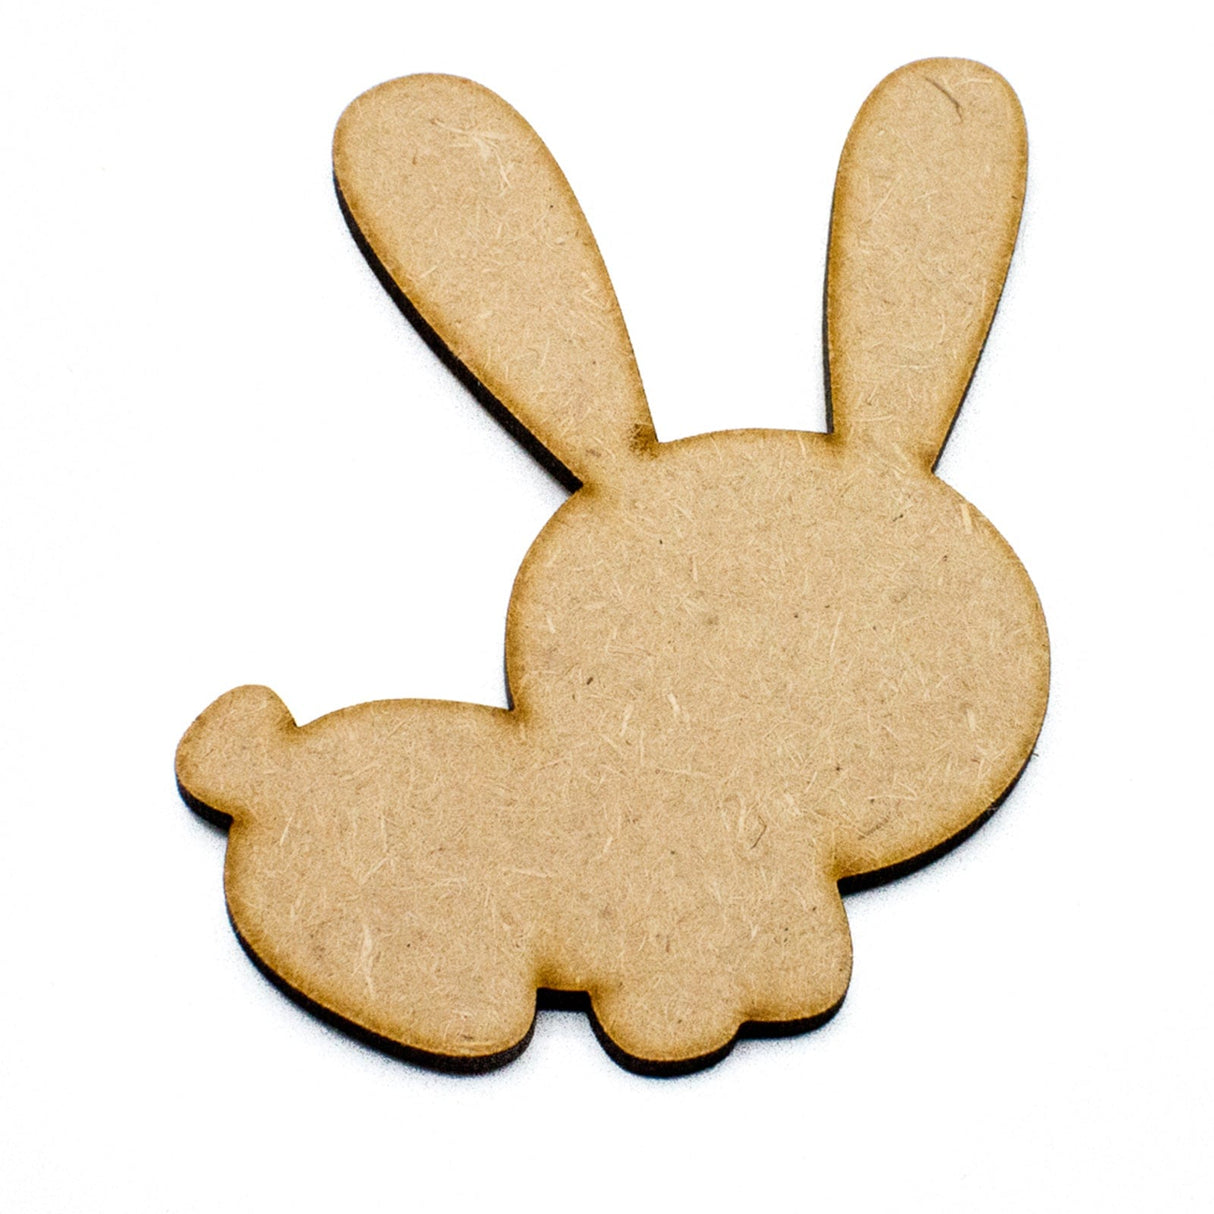 Cute Easter Bunny - Rabbit Craft Shapes - Laserworksuk